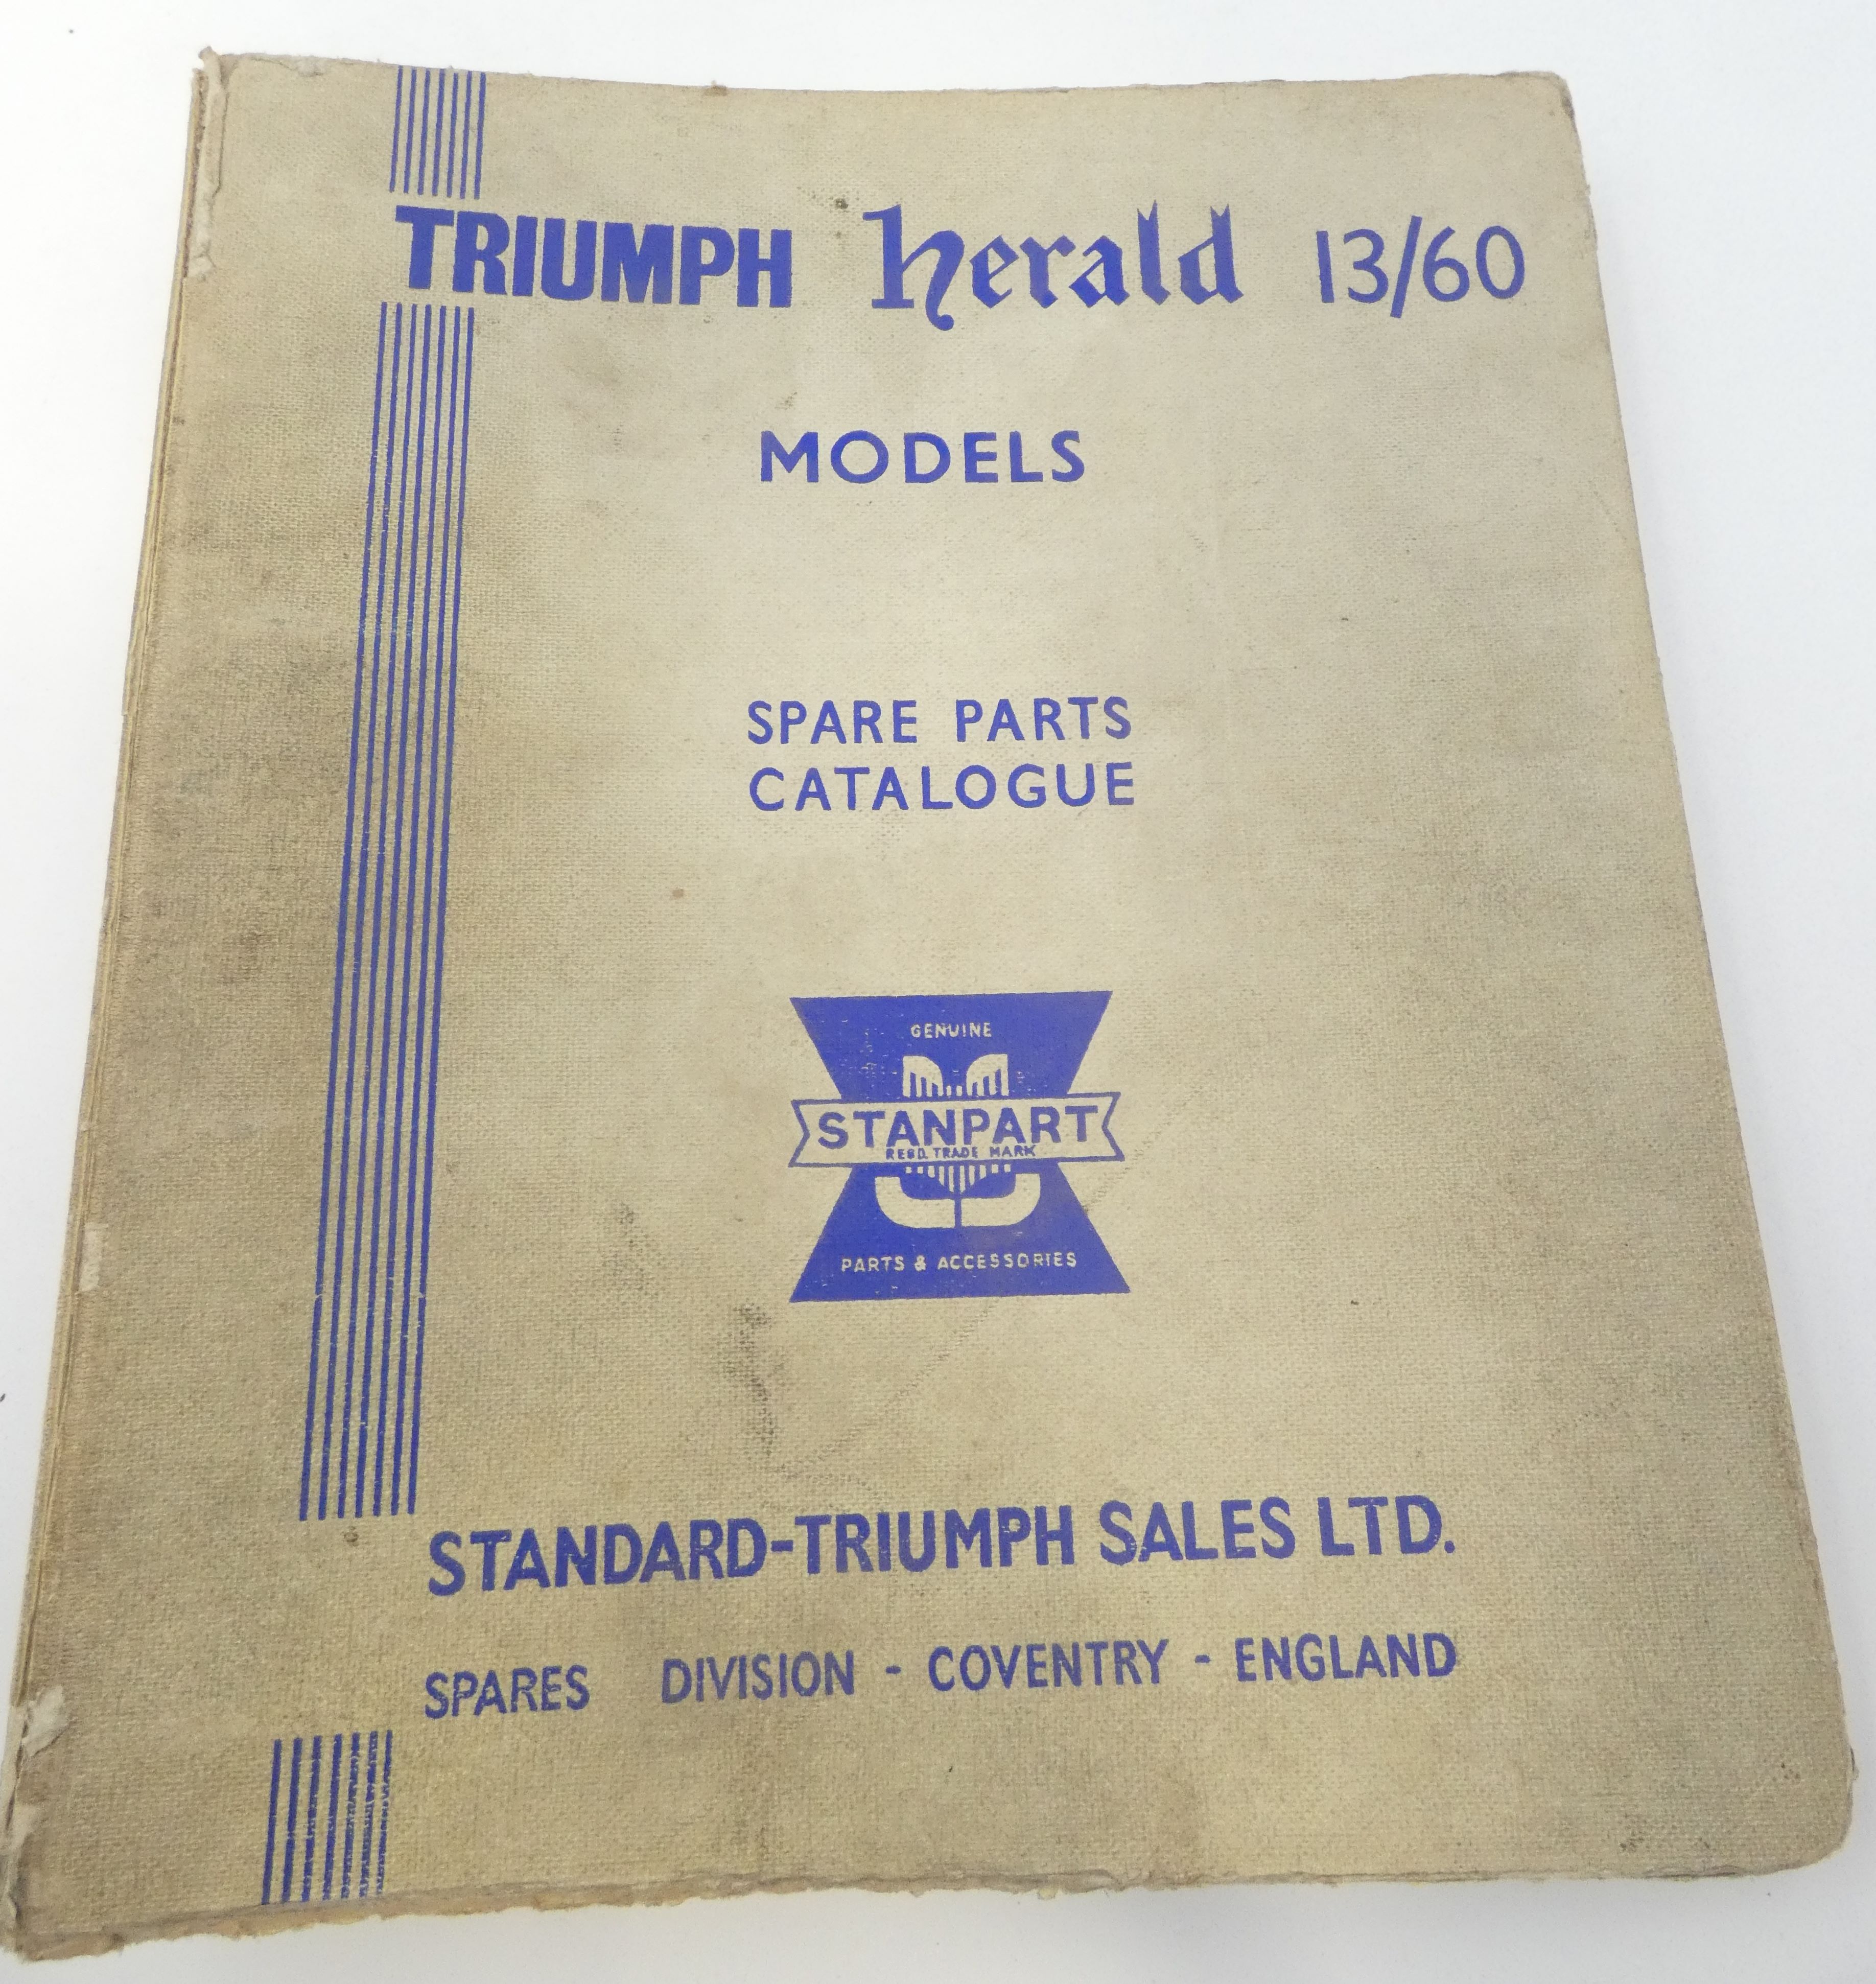 Triumph Herald 13/60 models spare parts catalogue